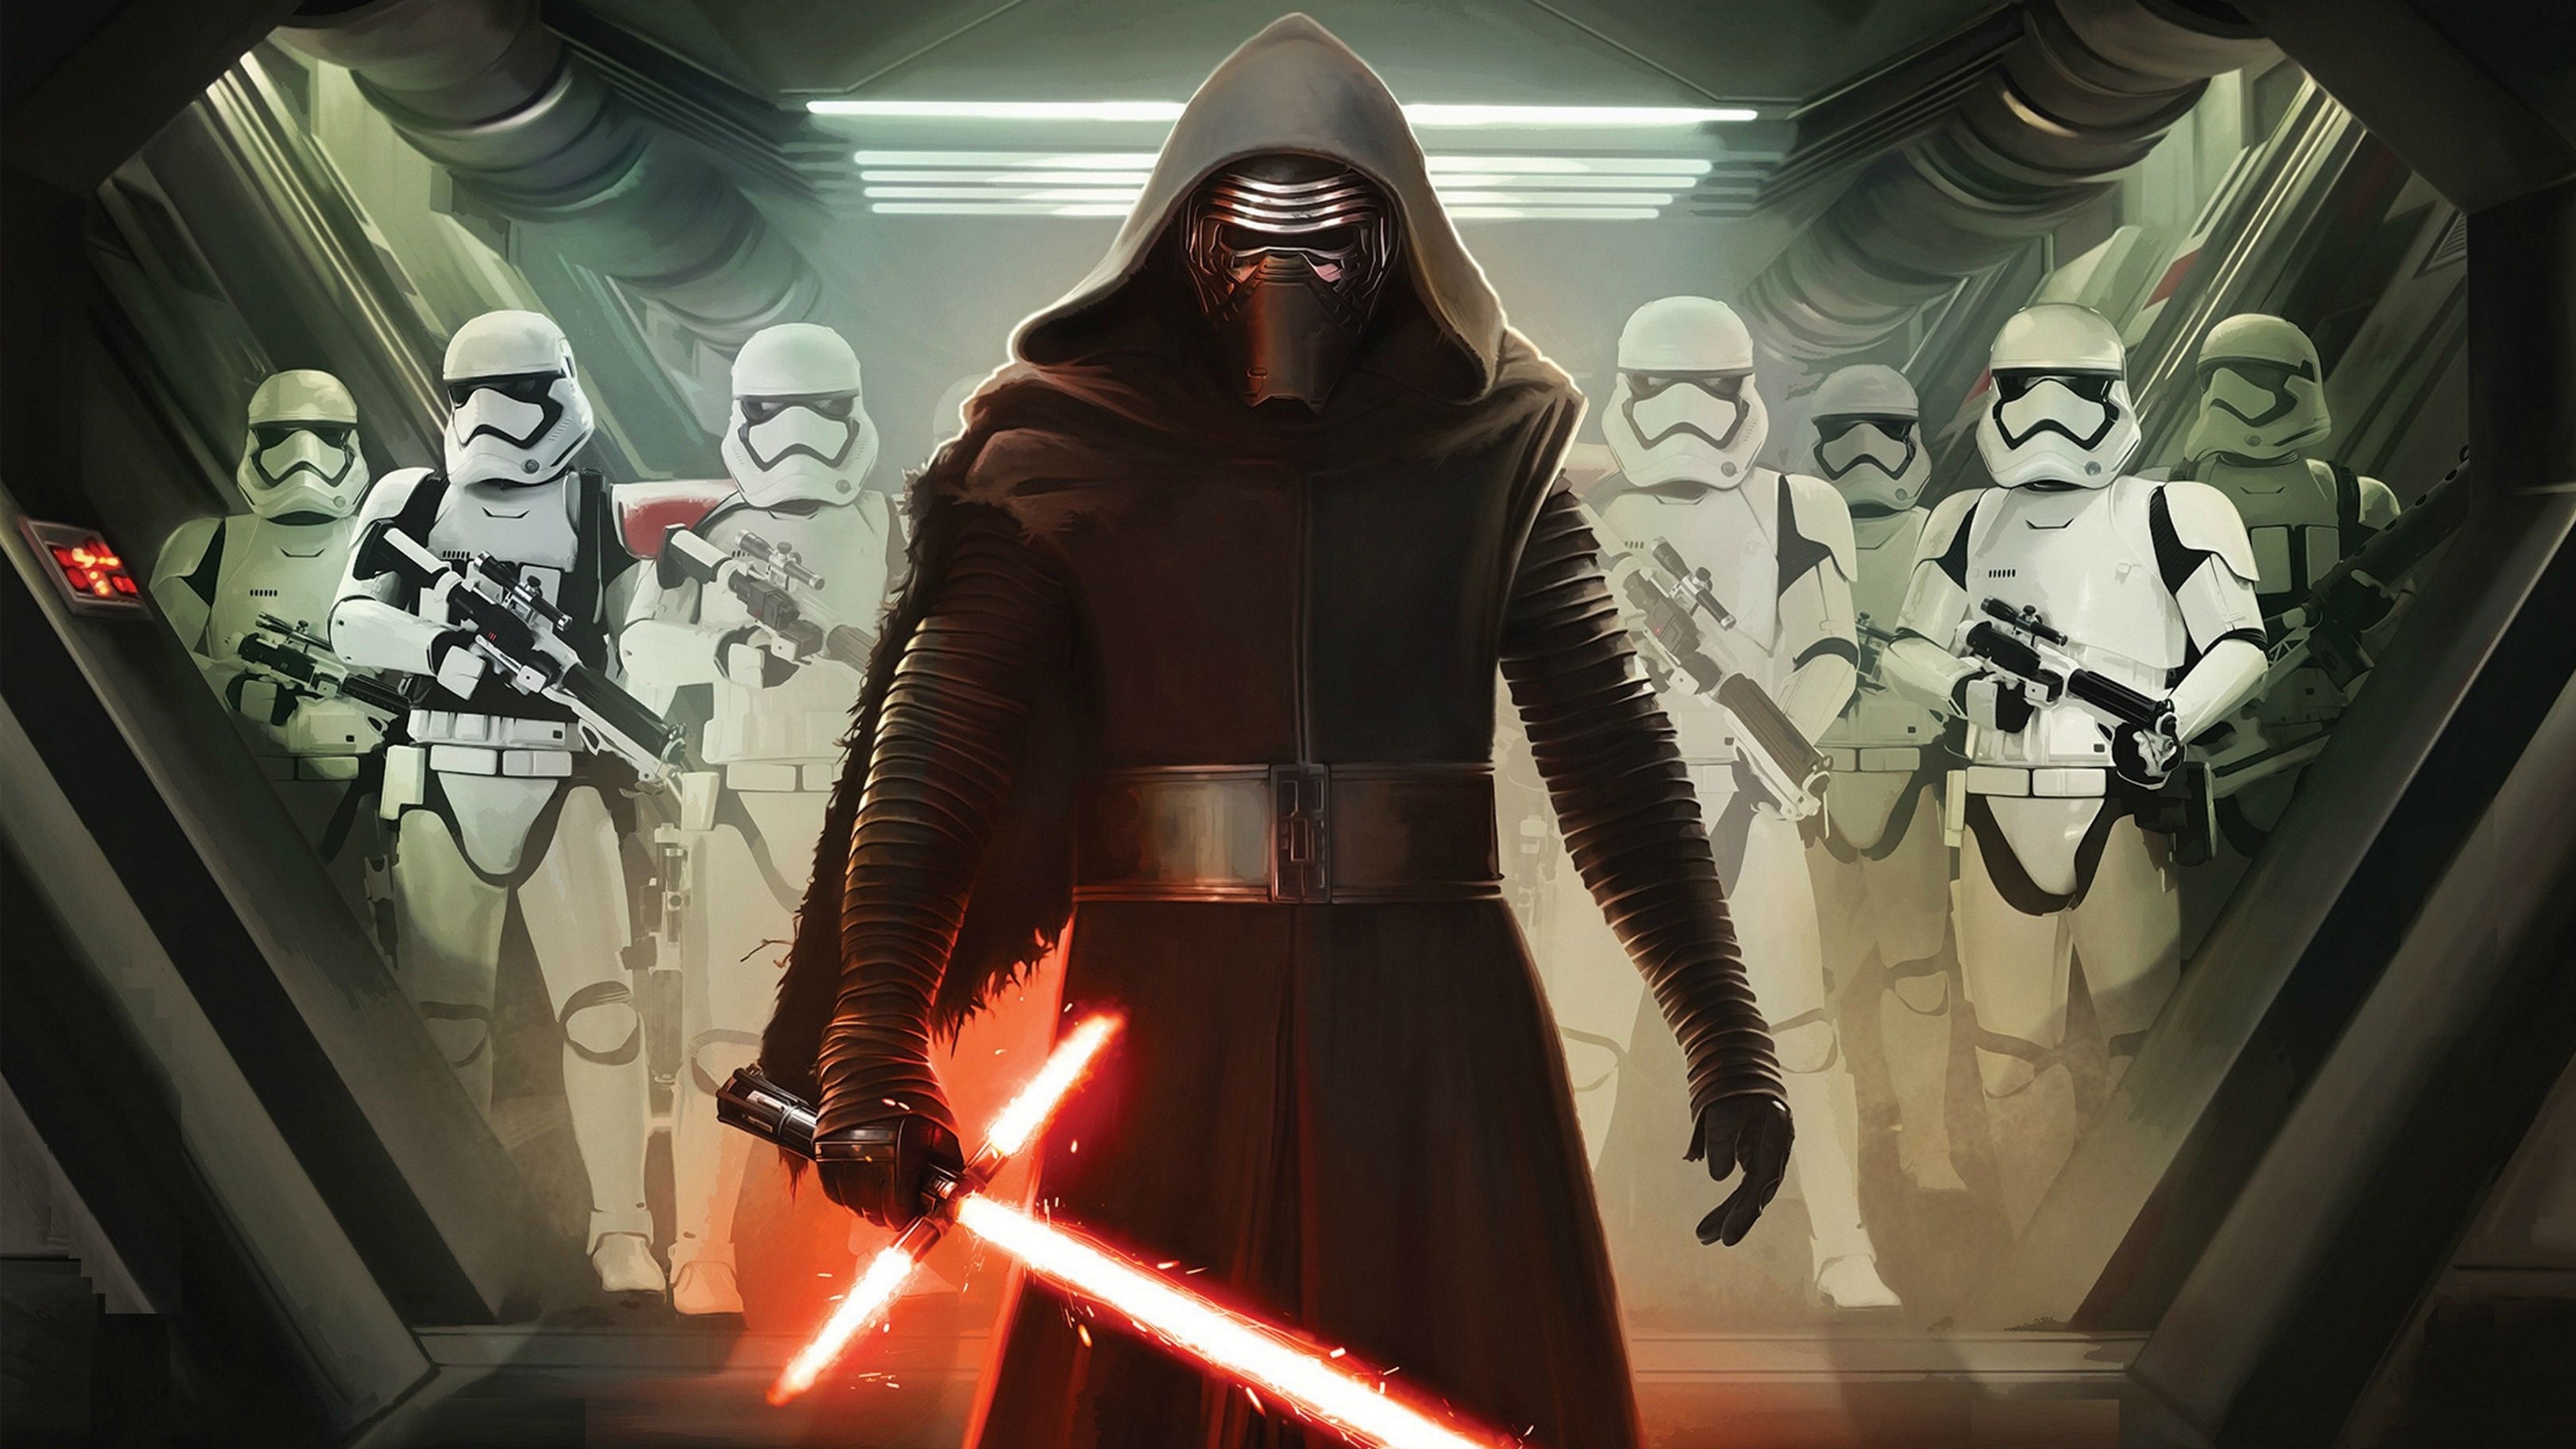 3840x2160 Star Wars Episode VII: The Force Awakens - Kylo Ren & Stormtroopers Poster